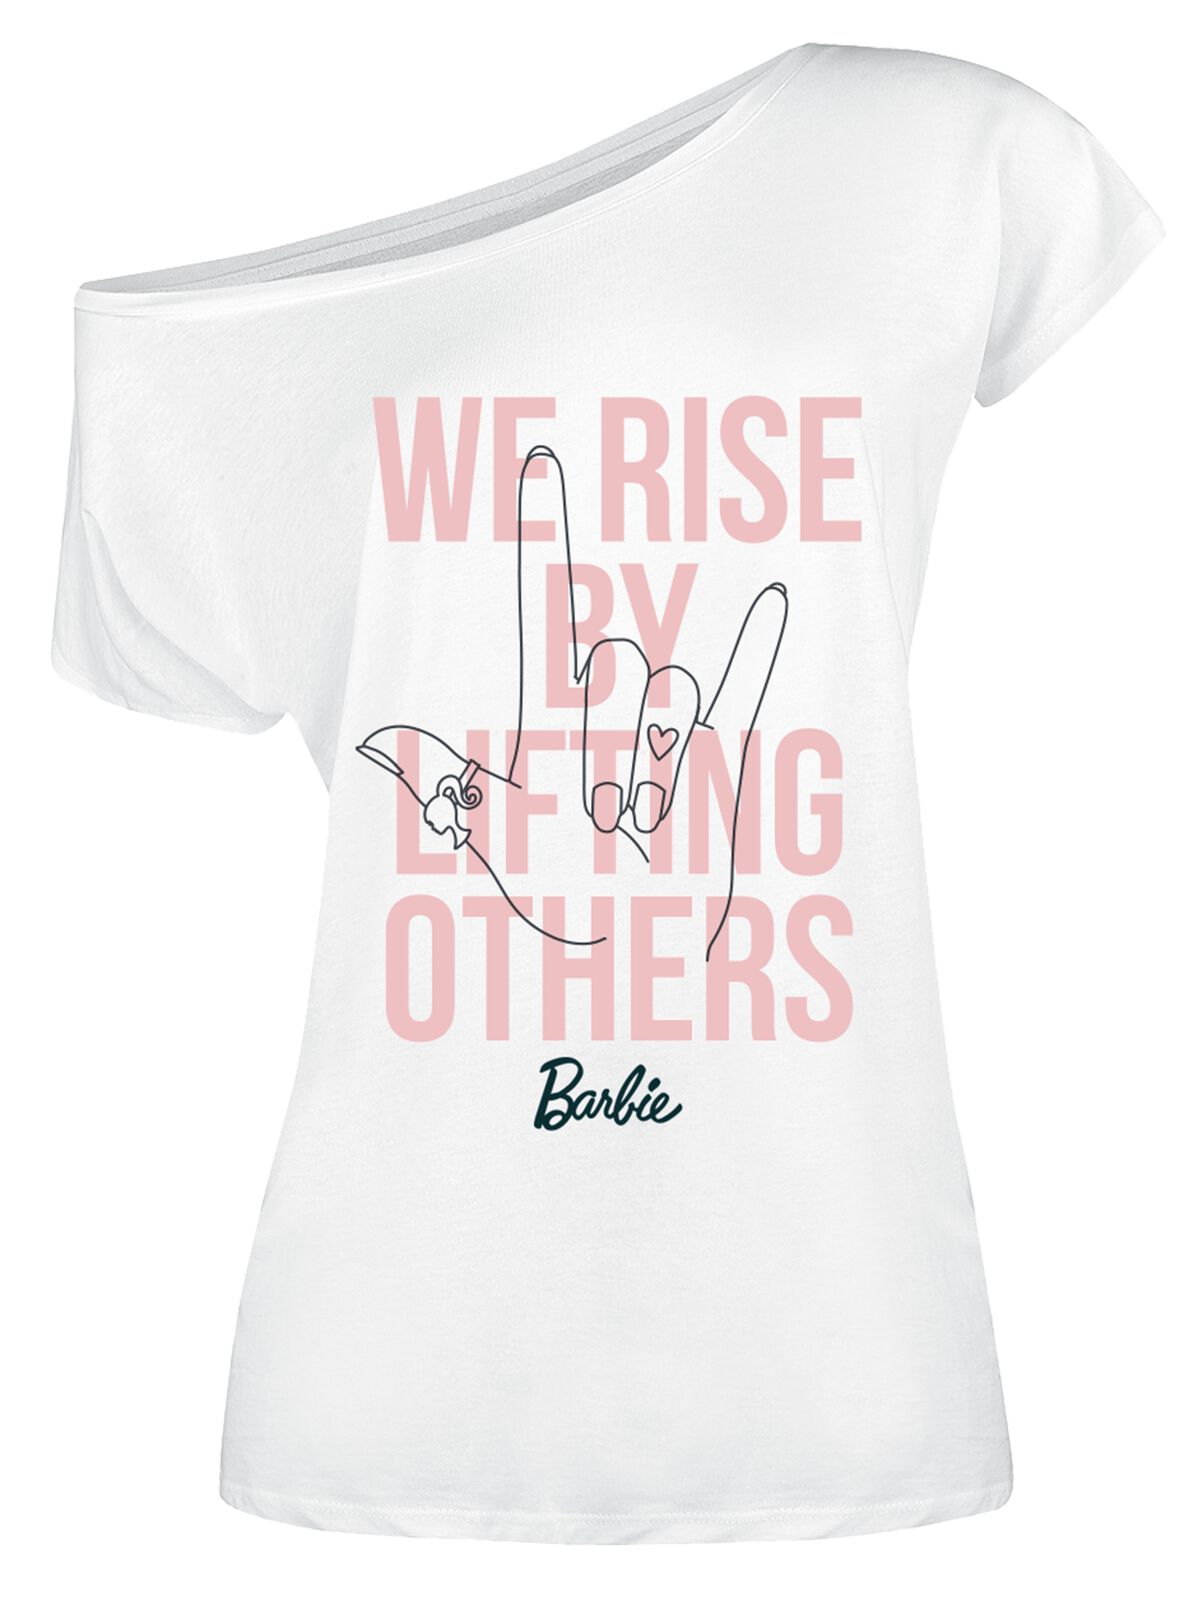 barbie t-shirt - we rise by lifting others - s bis xxl - fÃ¼r damen - grÃ¶ÃŸe s - - lizenzierter fanartikel weiÃŸ donna